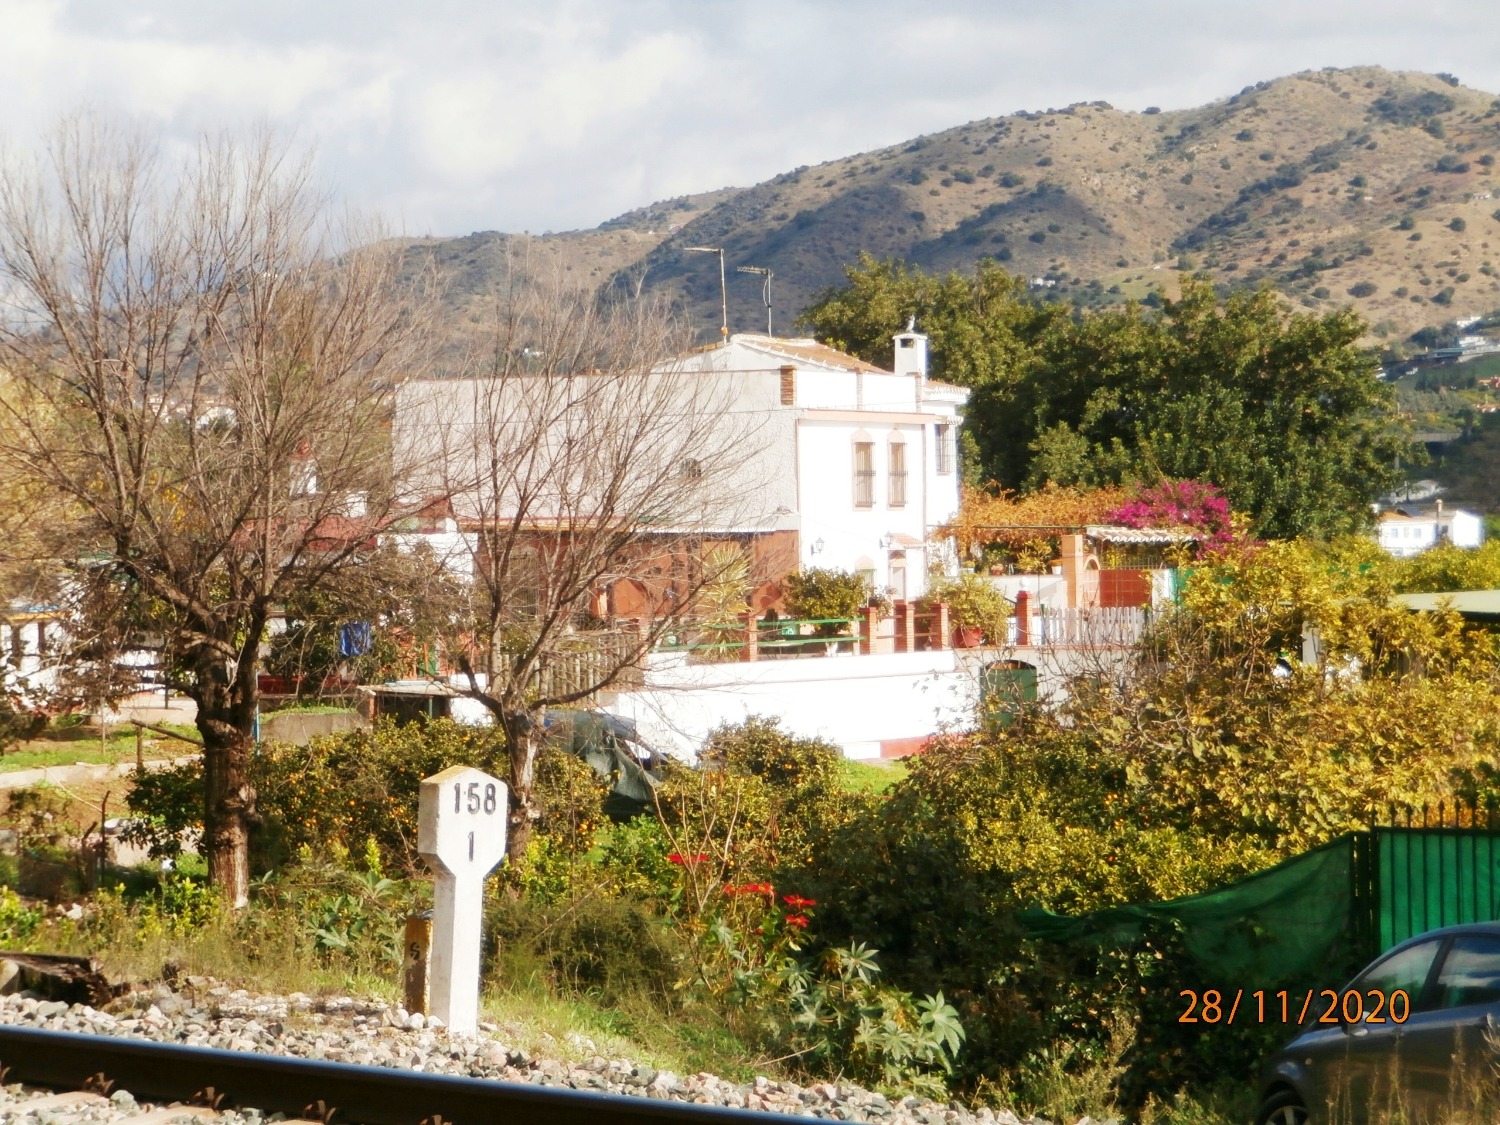 Gran Casa de campo pareada de estilo Andaluz con piscina, terreno cultivable, totalmente vallado 3.220 m2 aprox, buen acceso.